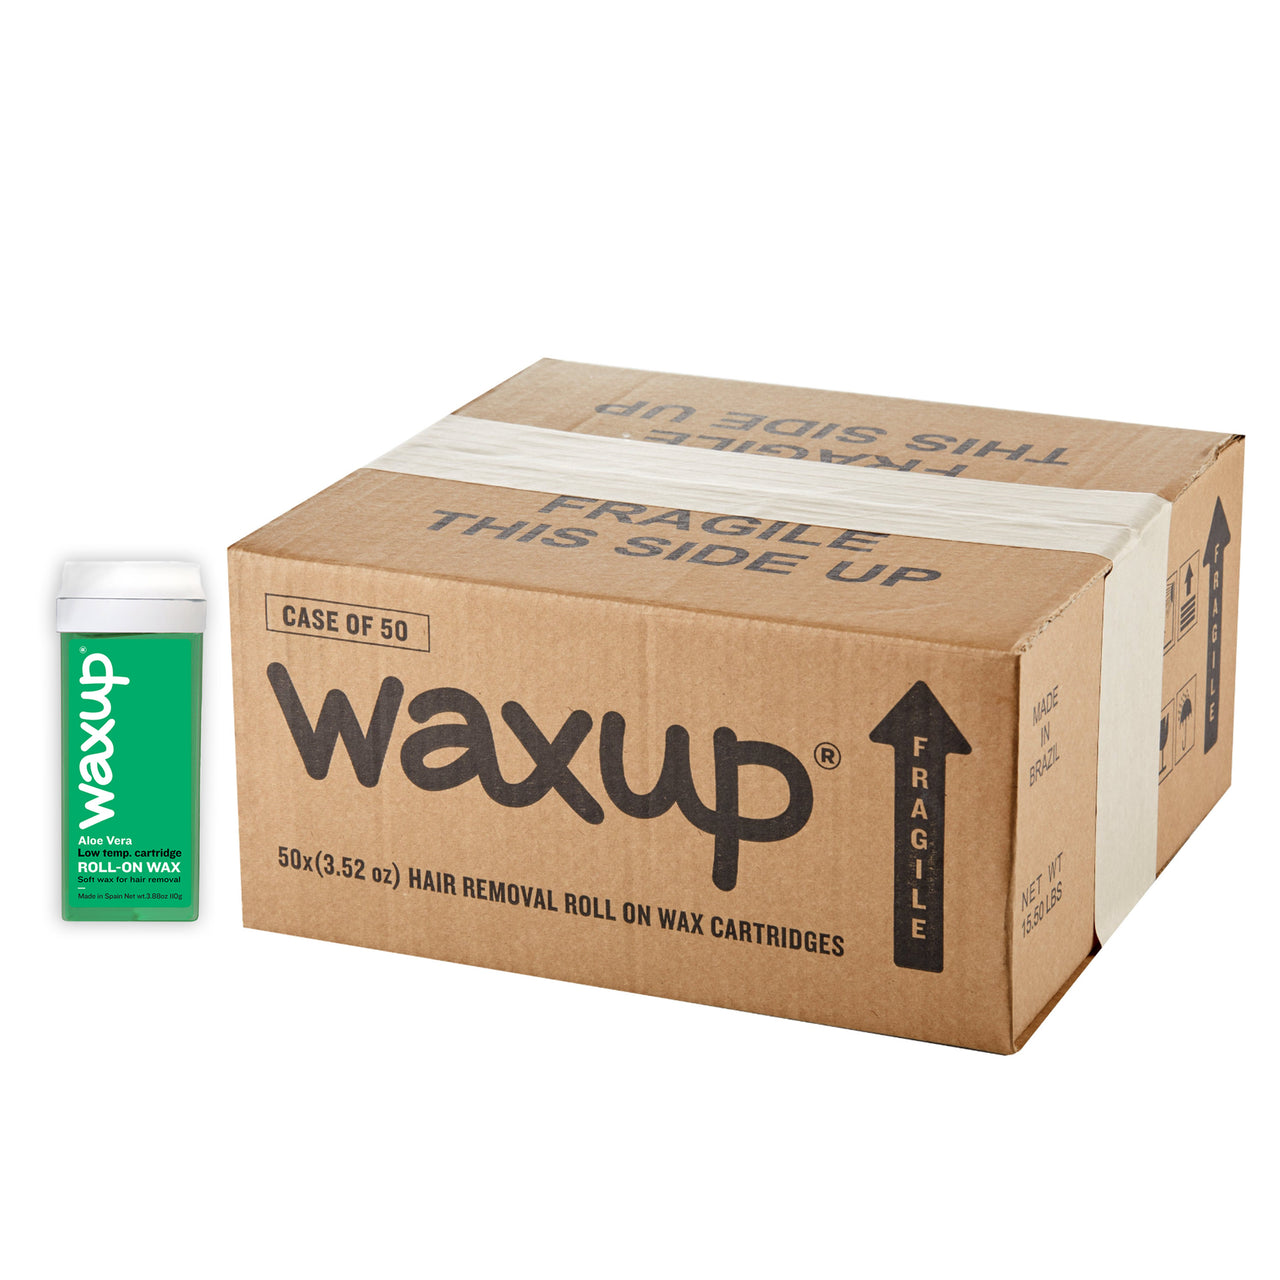 Aloe Vera Roll On Wax Cartridges Case of 50 - thatswaxup -  - Roll On Wax - waxup hair removal wax body waxing kit women and men professional waxing supplies